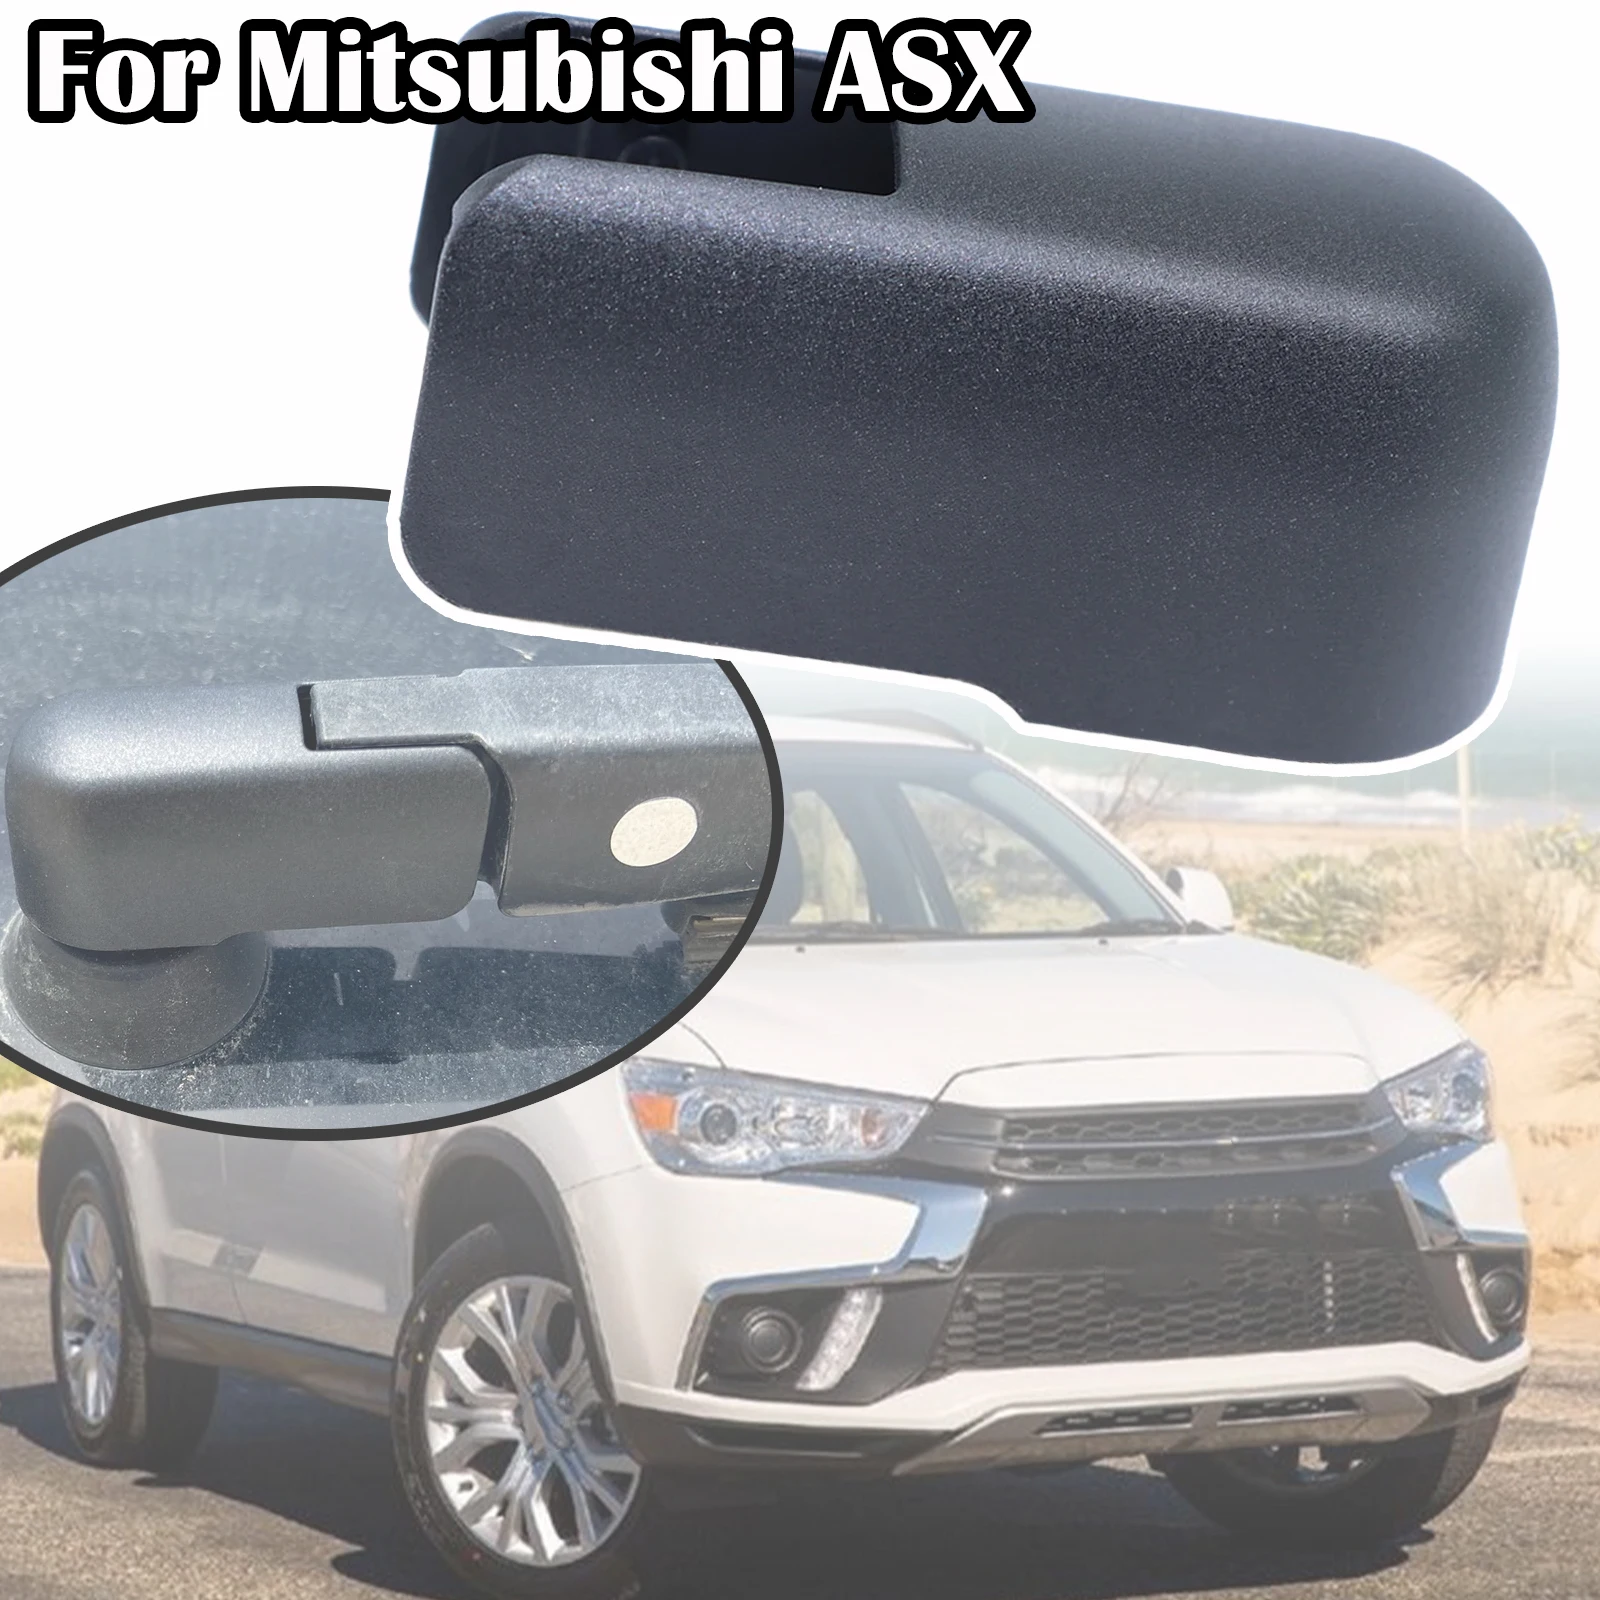 

For Mitsubishi ASX 2010 - 2020 Outlander Sport Peugeot 4008 Car Rear Windshield Wiper Arm Nut Bolt Rocker Cover Cap Replacement